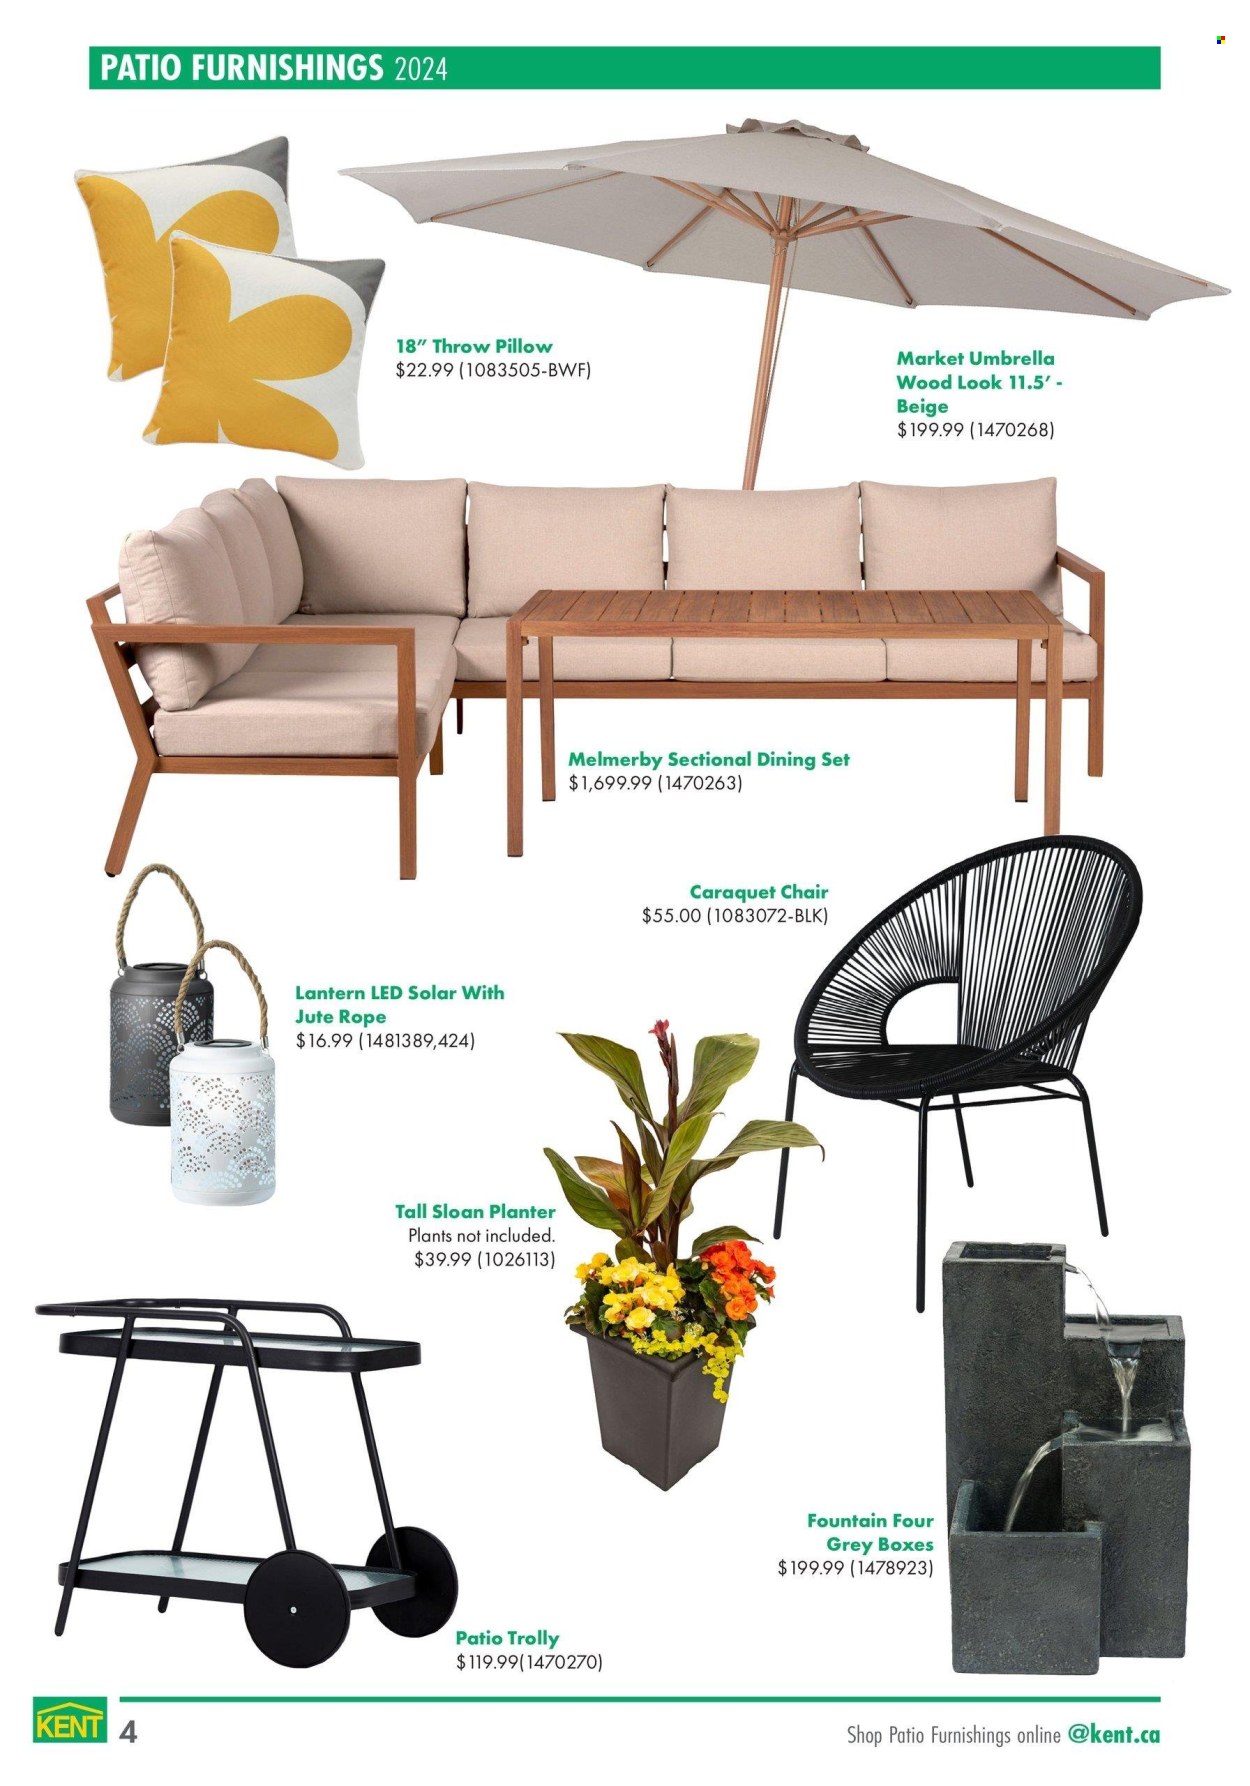 thumbnail - Kent Flyer - April 18, 2024 - May 29, 2024 - Sales products - rope, pillow, blanket, dining set, chair, lantern, umbrella, parasol, plant pot. Page 4.